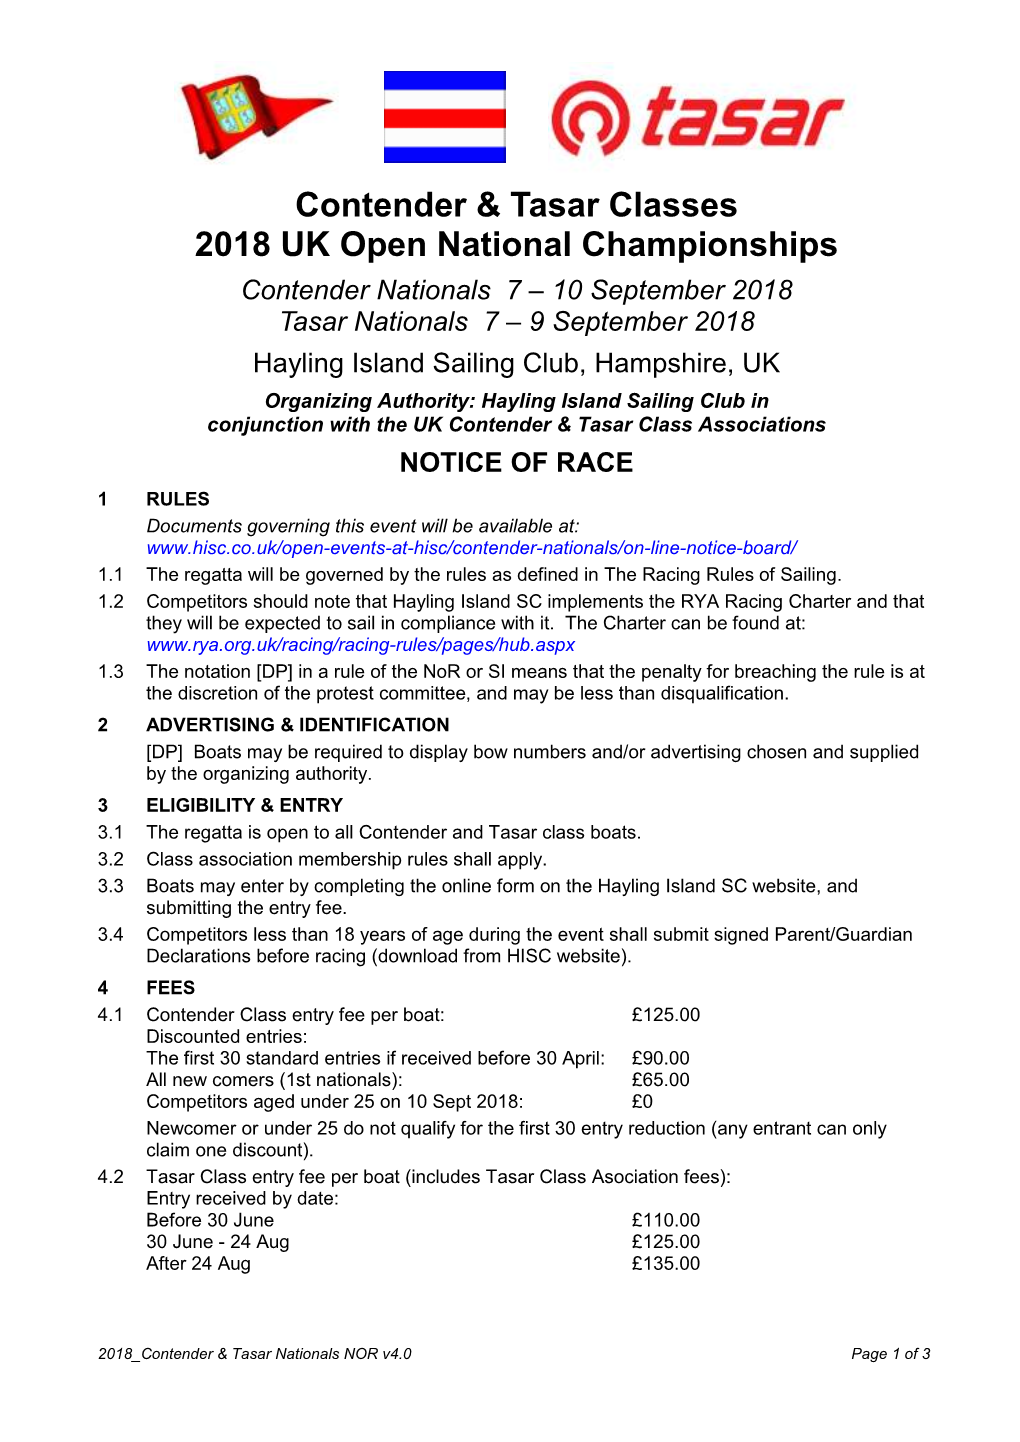 Contender & Tasar Classes 2018 UK Open National Championships